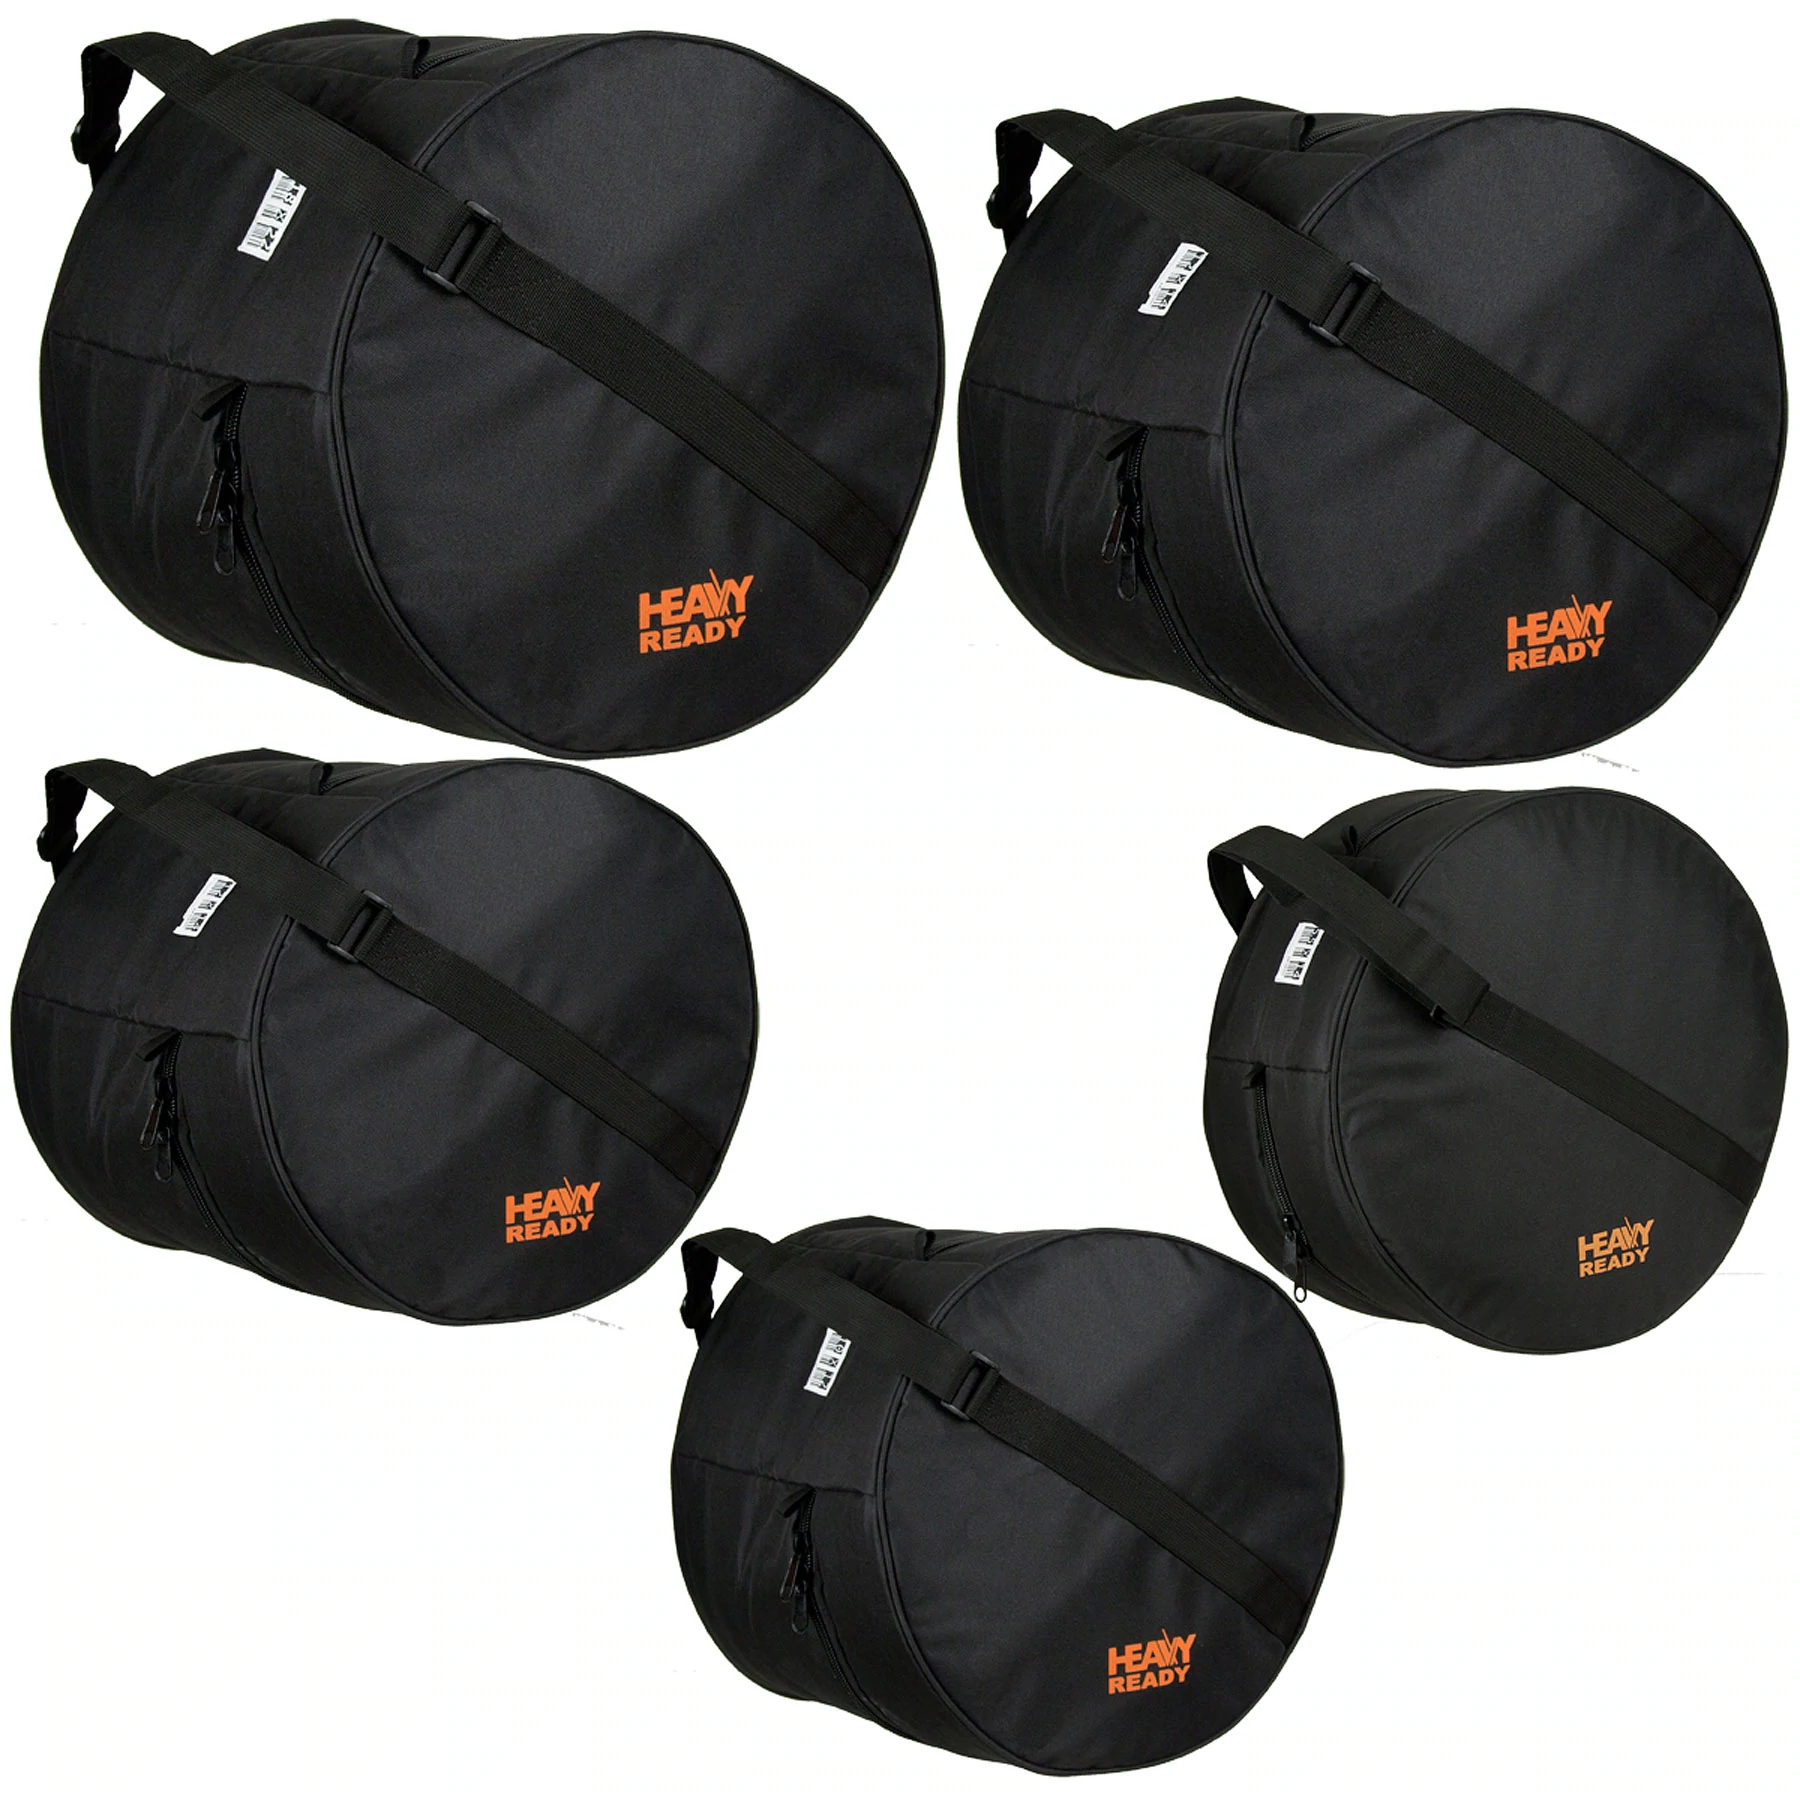 PROTEC Heavy Ready 5pc Bag Kit - Standard 4